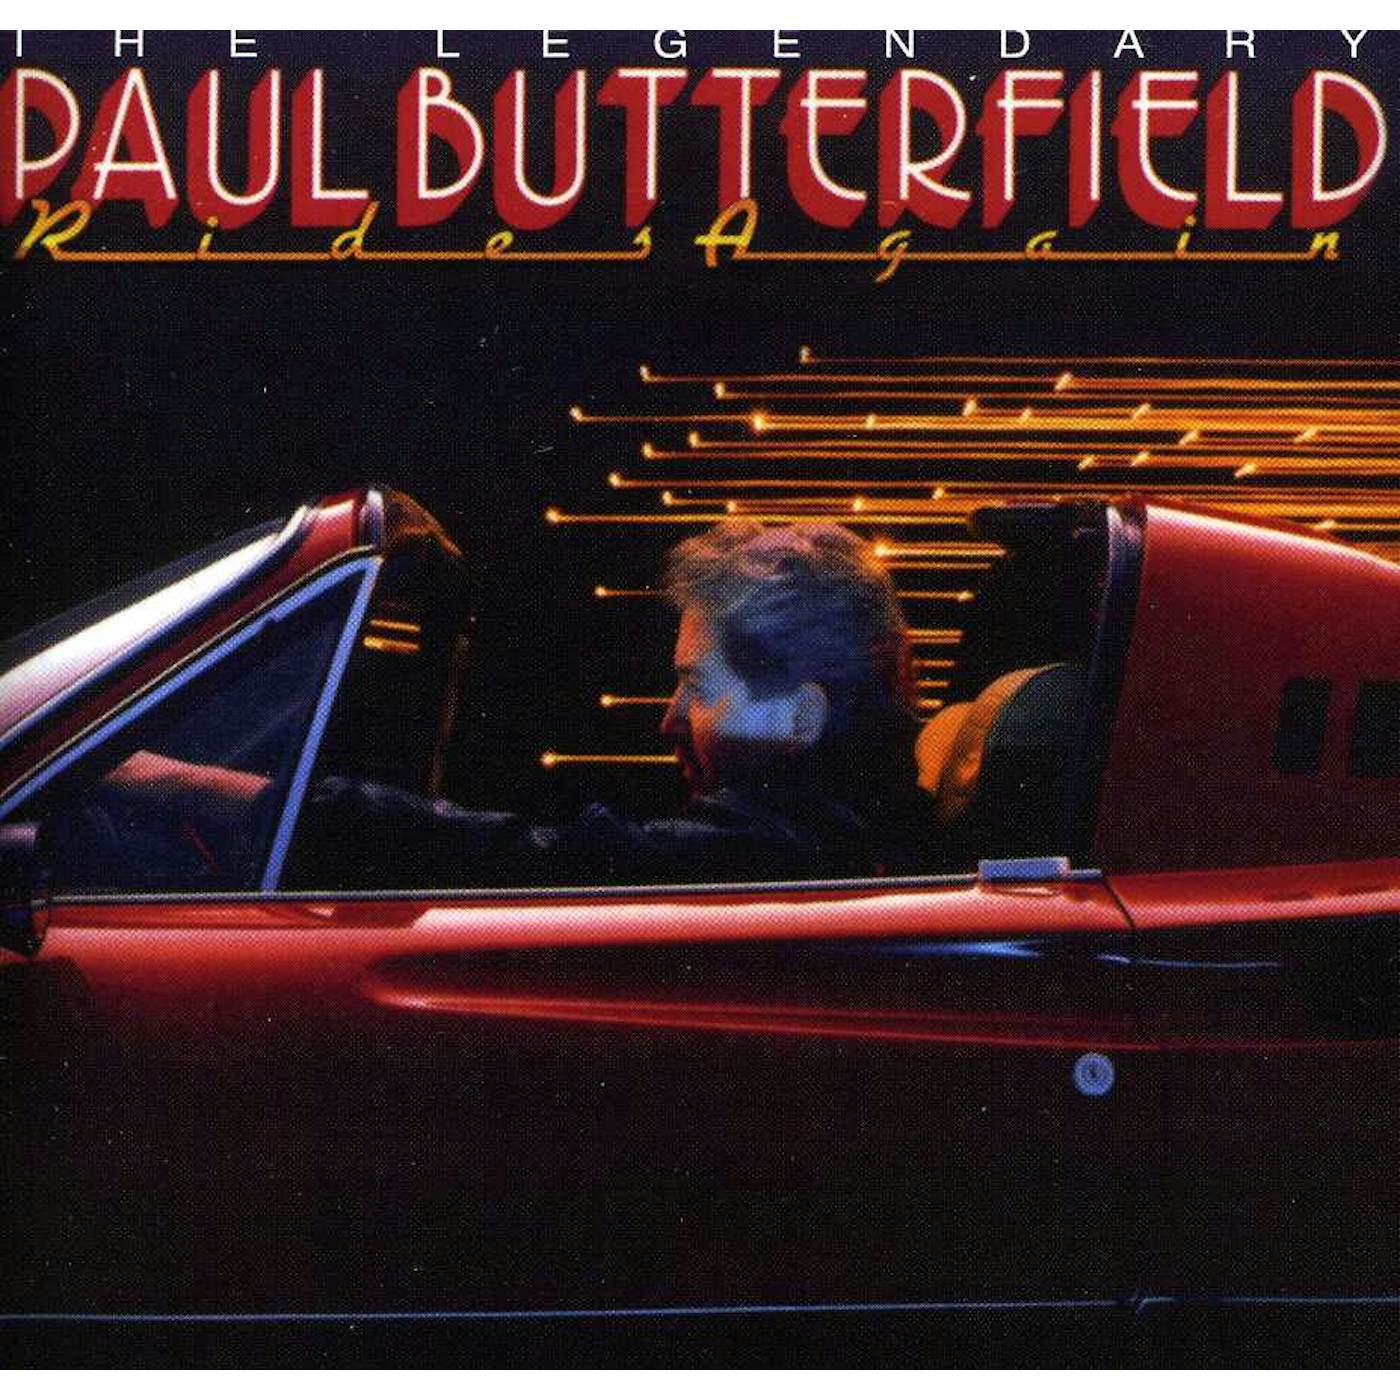 LEGENDARY PAUL BUTTERFIELD RIDES AGAIN CD